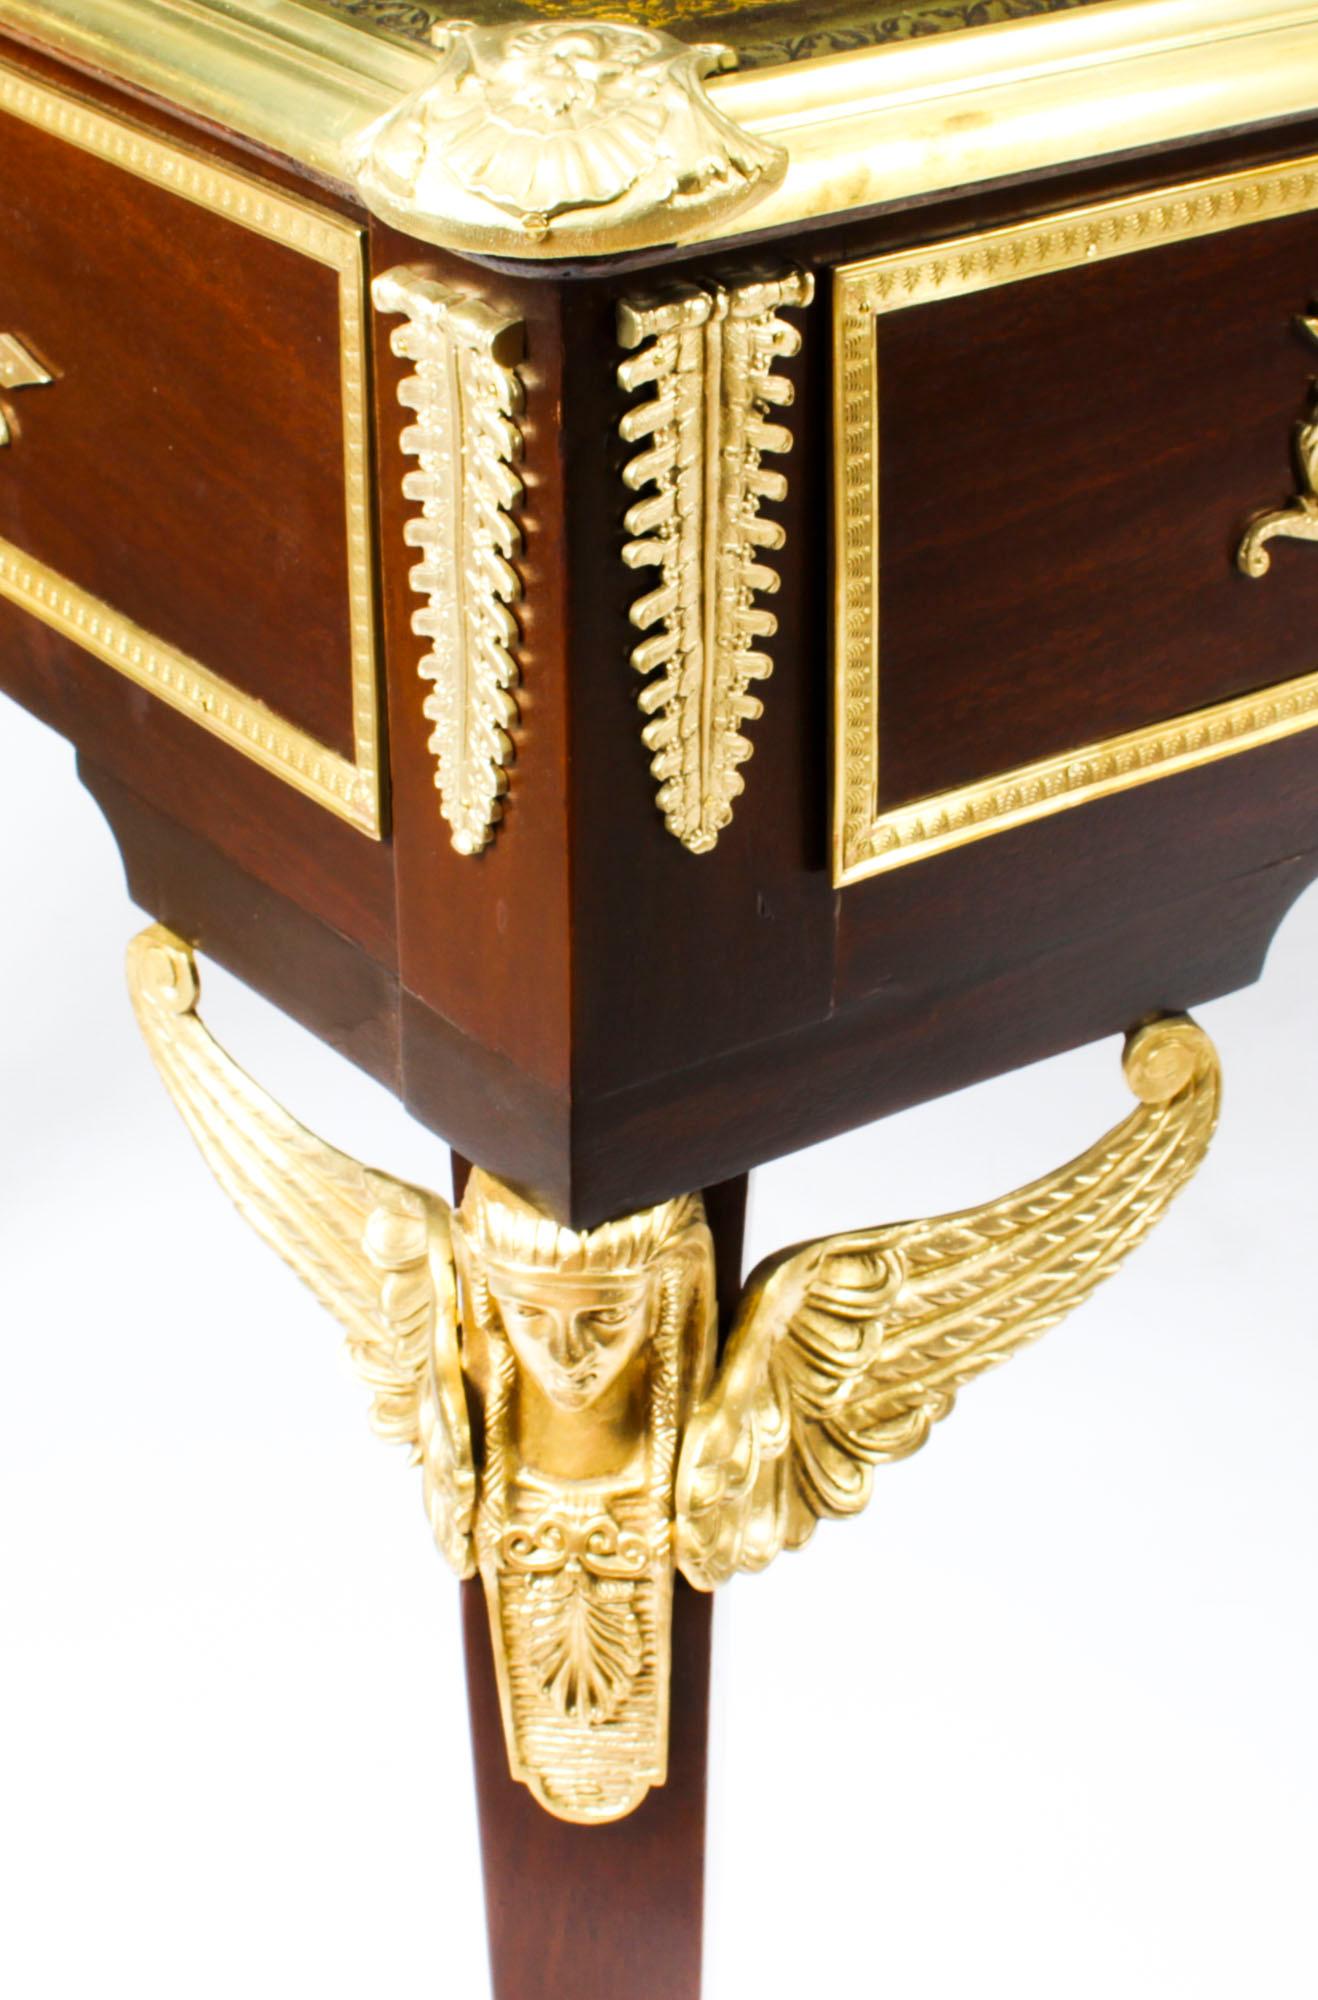 Antique Monumental French Empire Bureau Plat Desk Writing Table, 19th Century For Sale 4